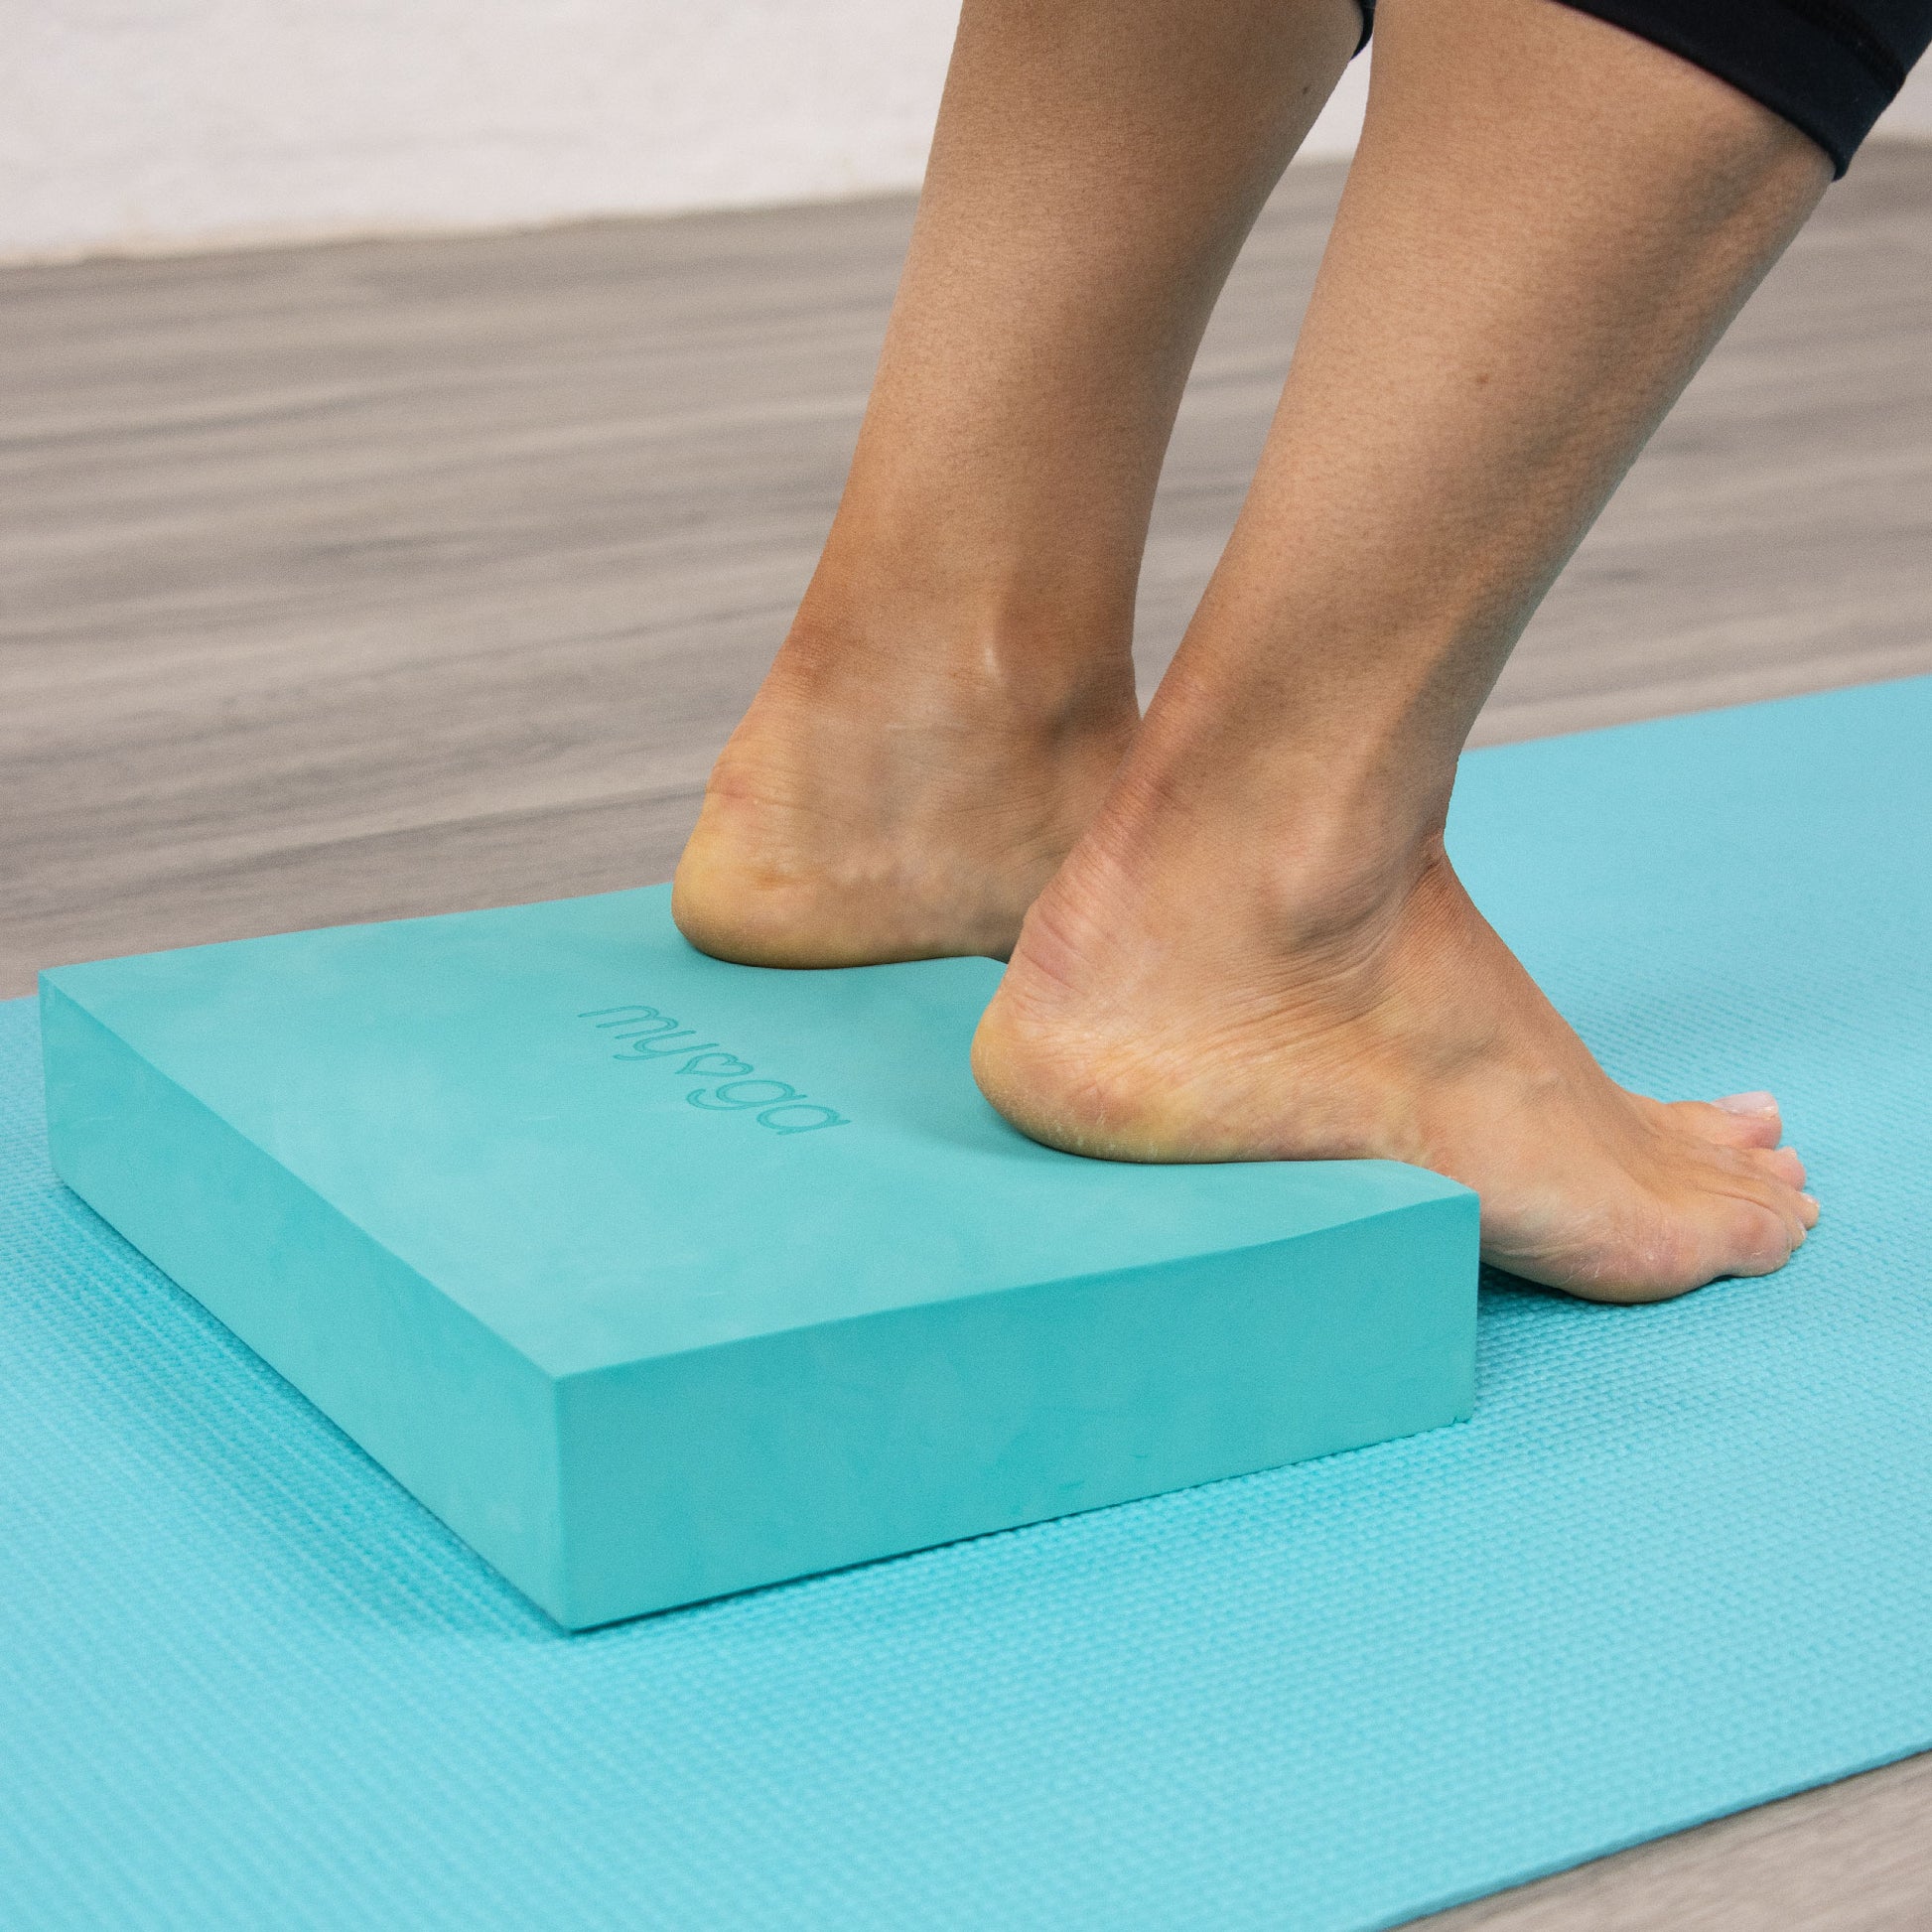 Foam Yoga Block - Turquoise –